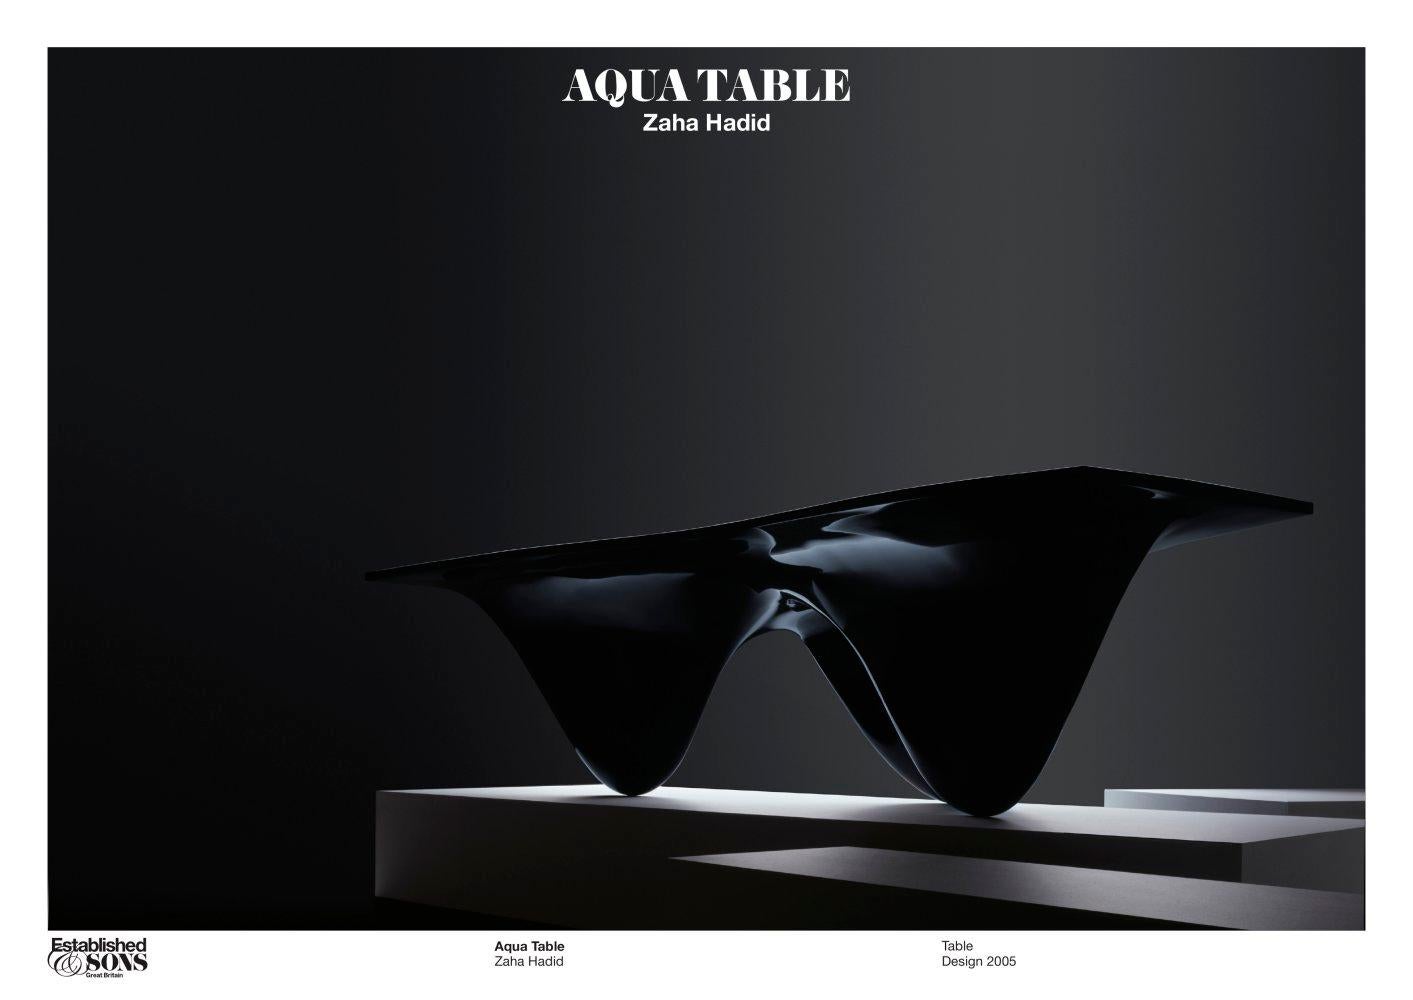 English Aqua Table by Zaha Hadid for Established & Sons in High Gloss Black